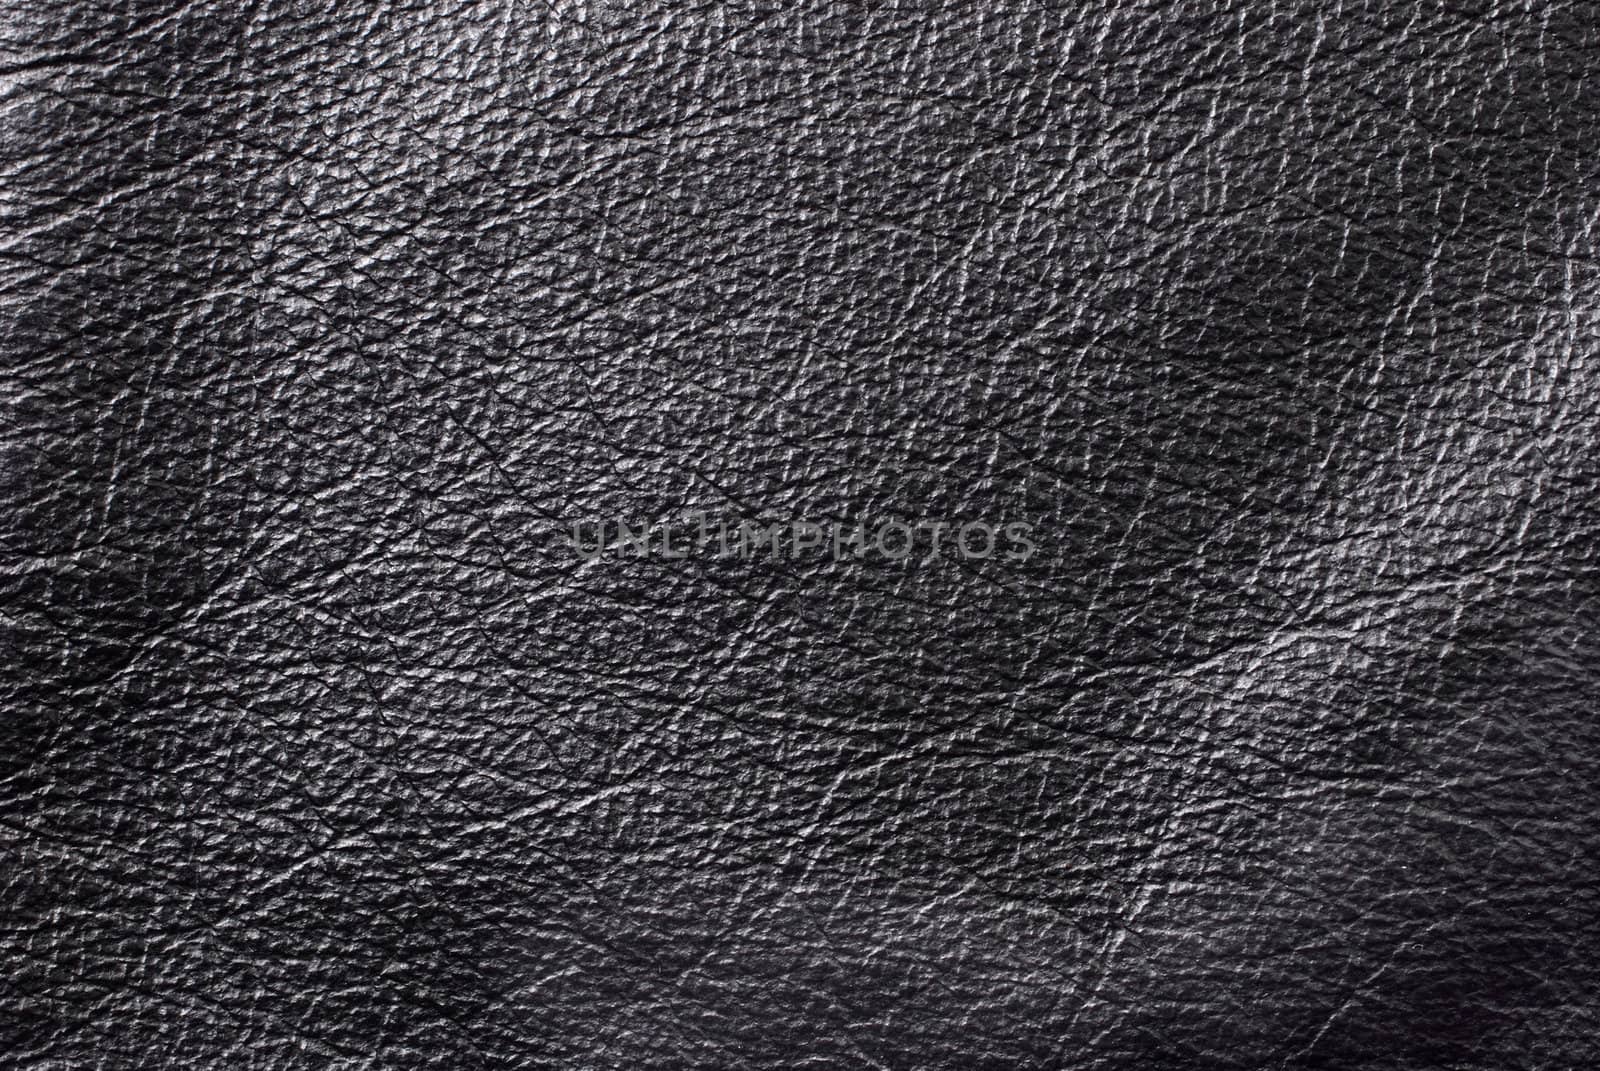 Black Leather Background by dehooks